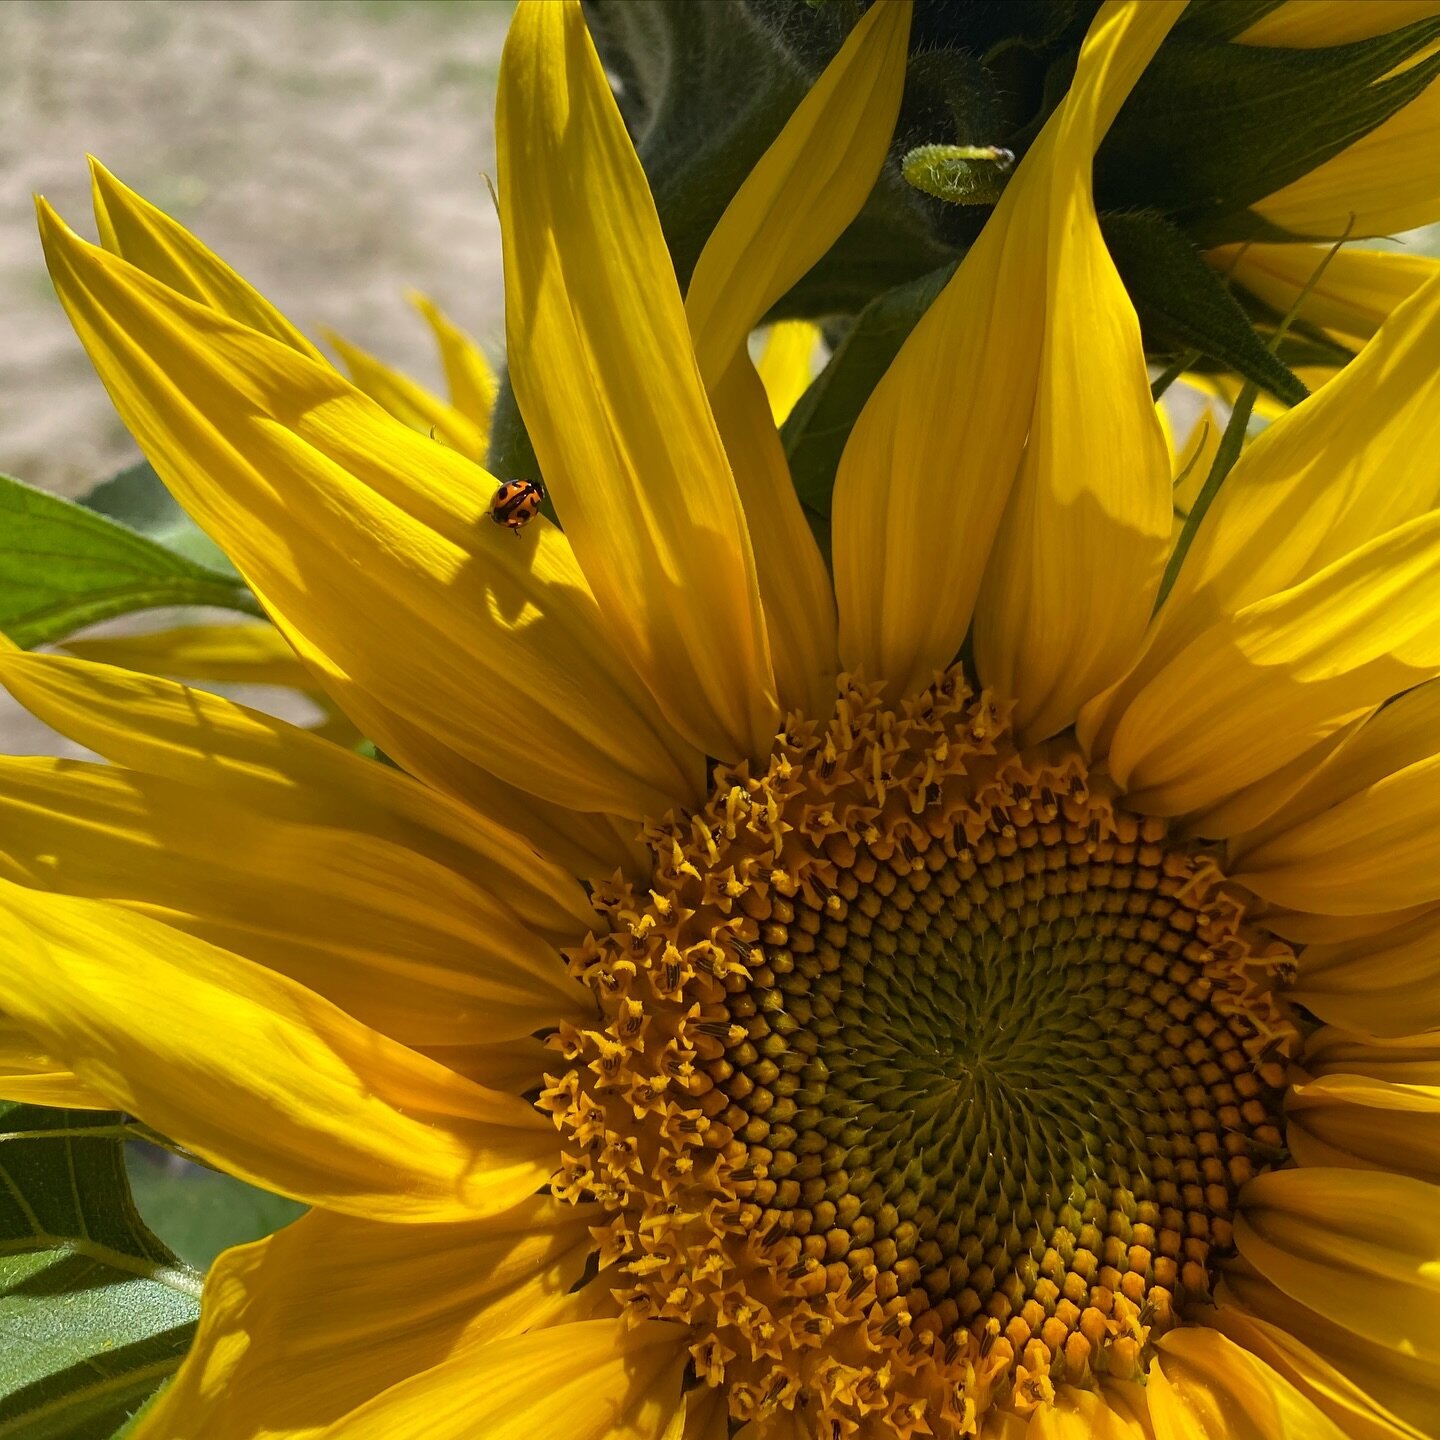 Summer sunflowers so bright that they attract their own lucky charms; ladybeetles 🐞
.
.
#sunflowerseason #atkinsfarm #atkinsfarmmeadows #luckycharm